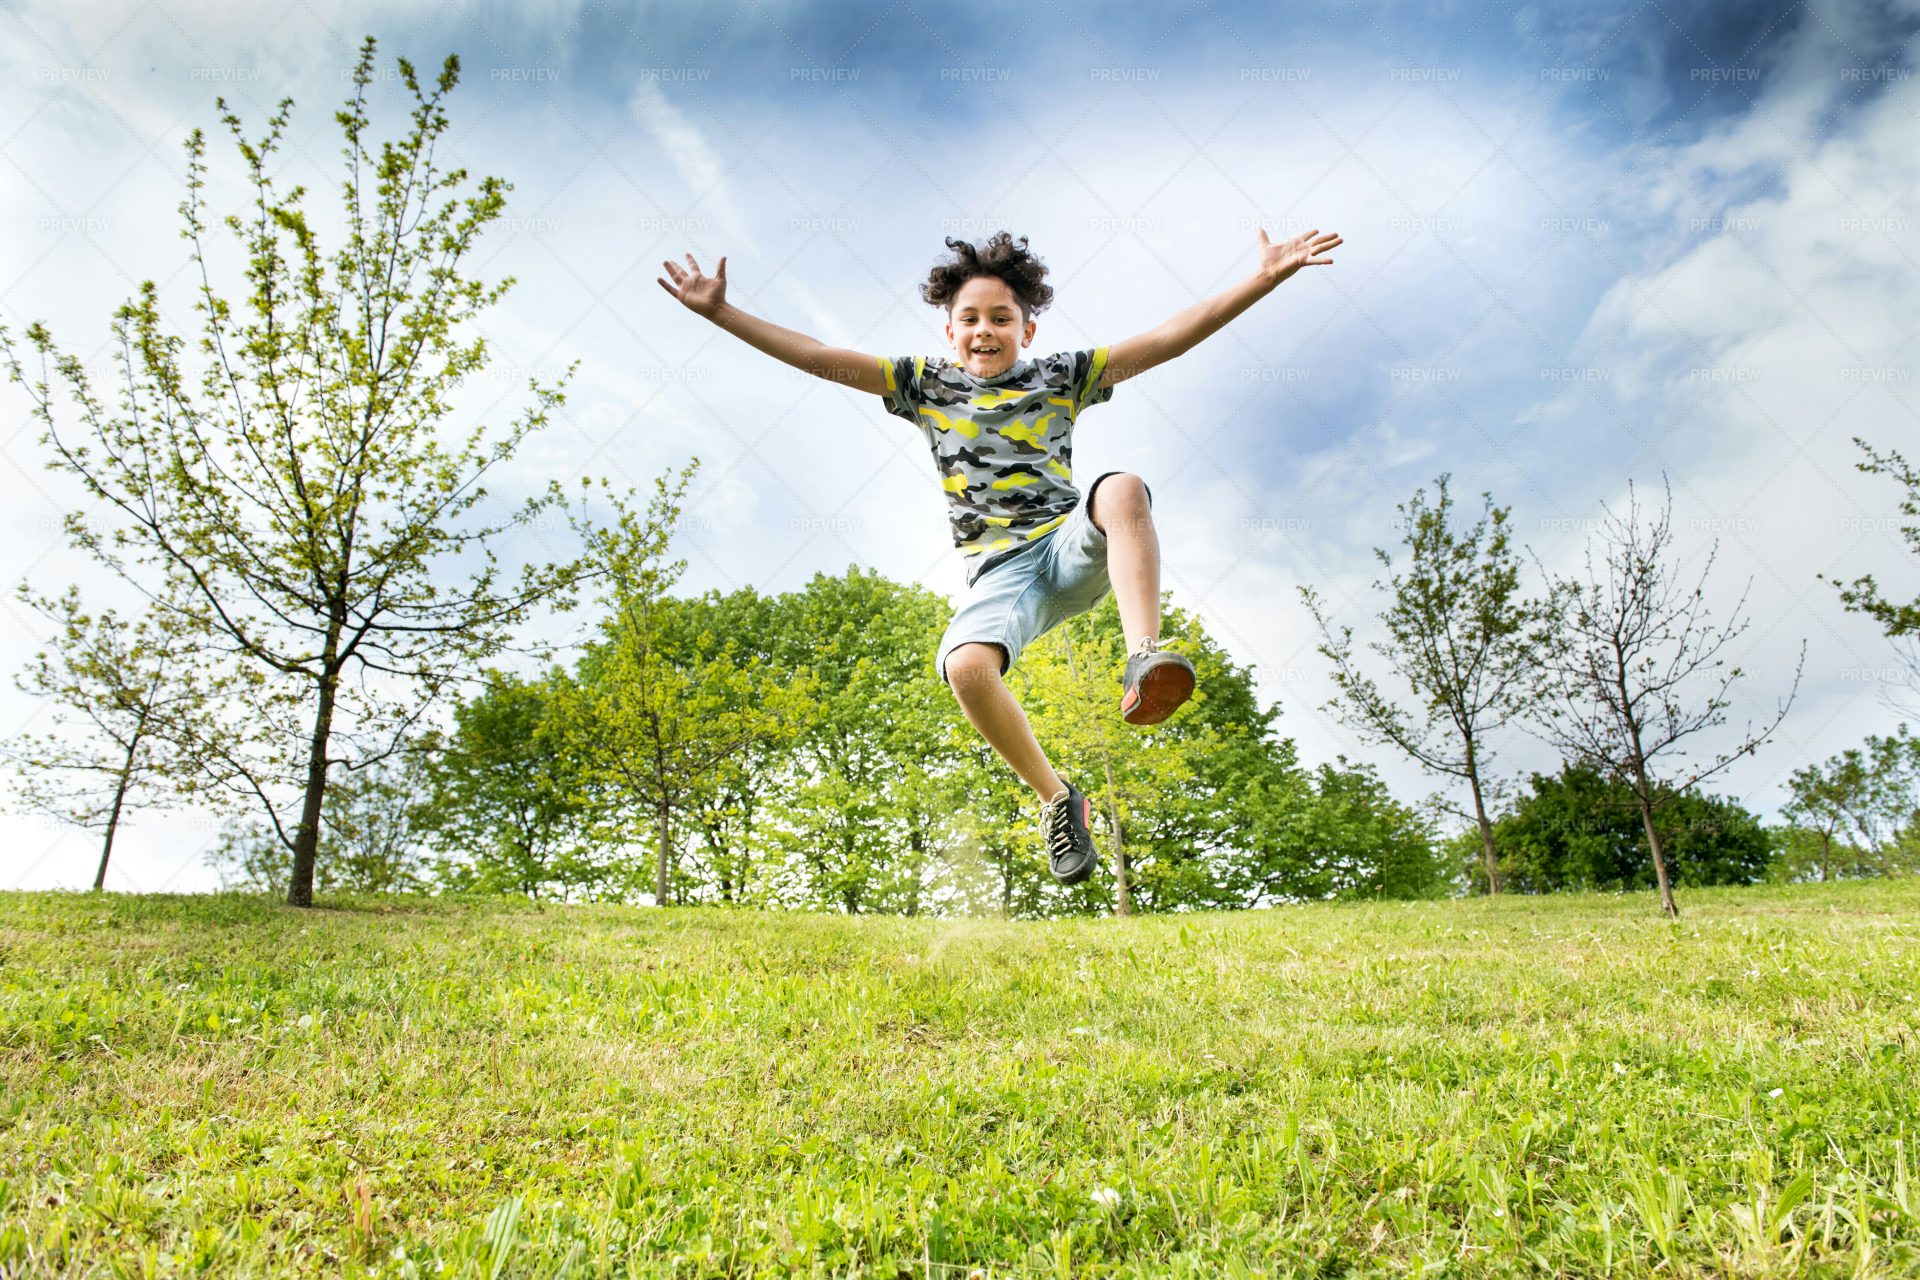 He jumps he had been jumping. Дети в прыжке. Мальчик прыгает. Мальчик в прыжке. Дети прыгают на траве.